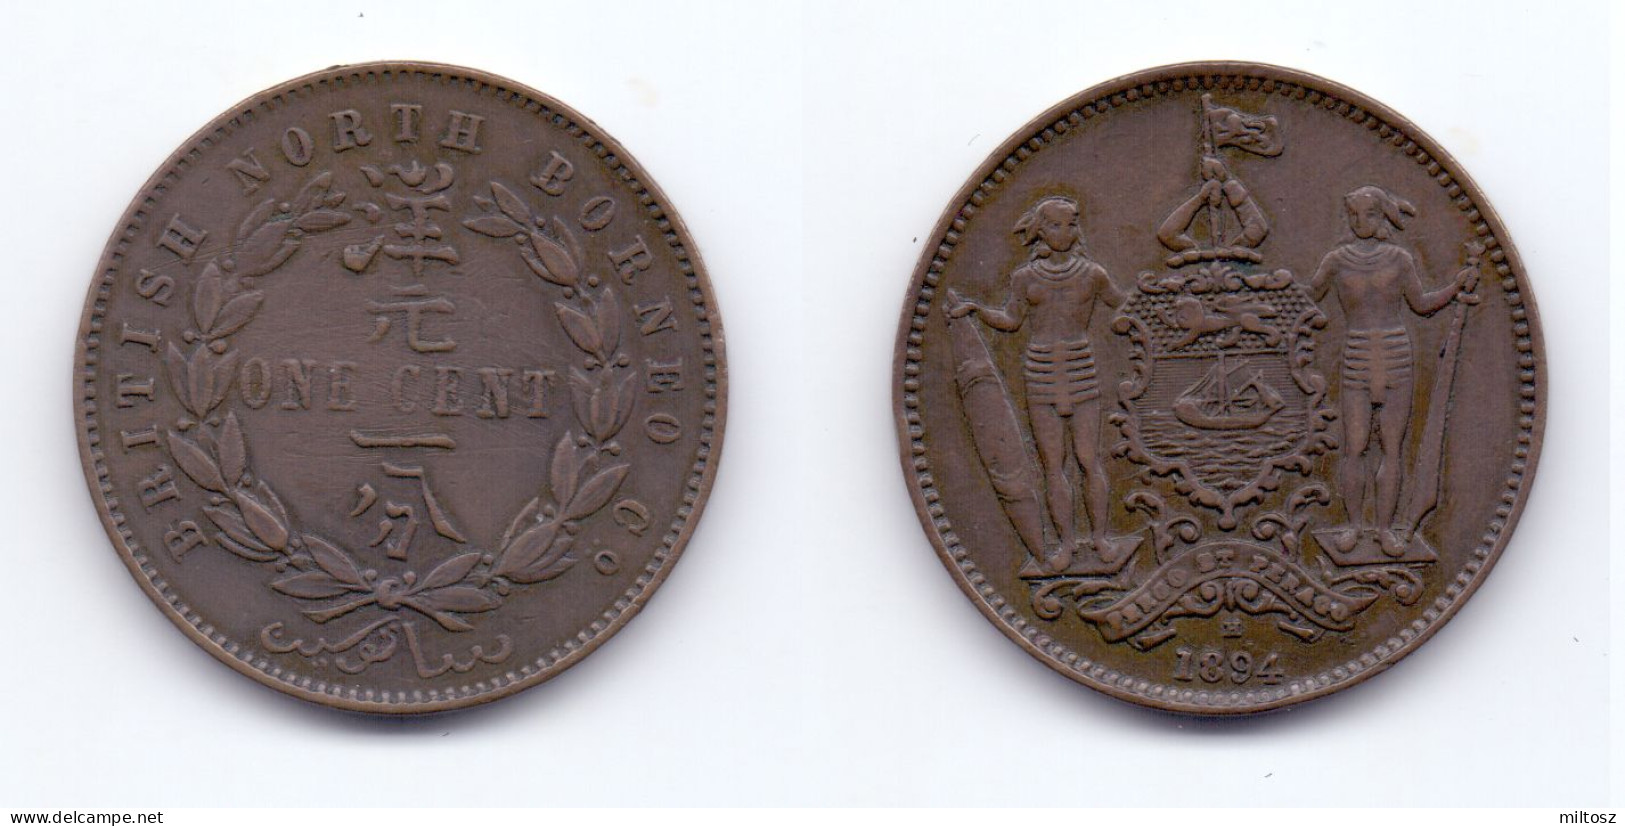 British North Borneo 1 Cent 1894 H - Malaysia